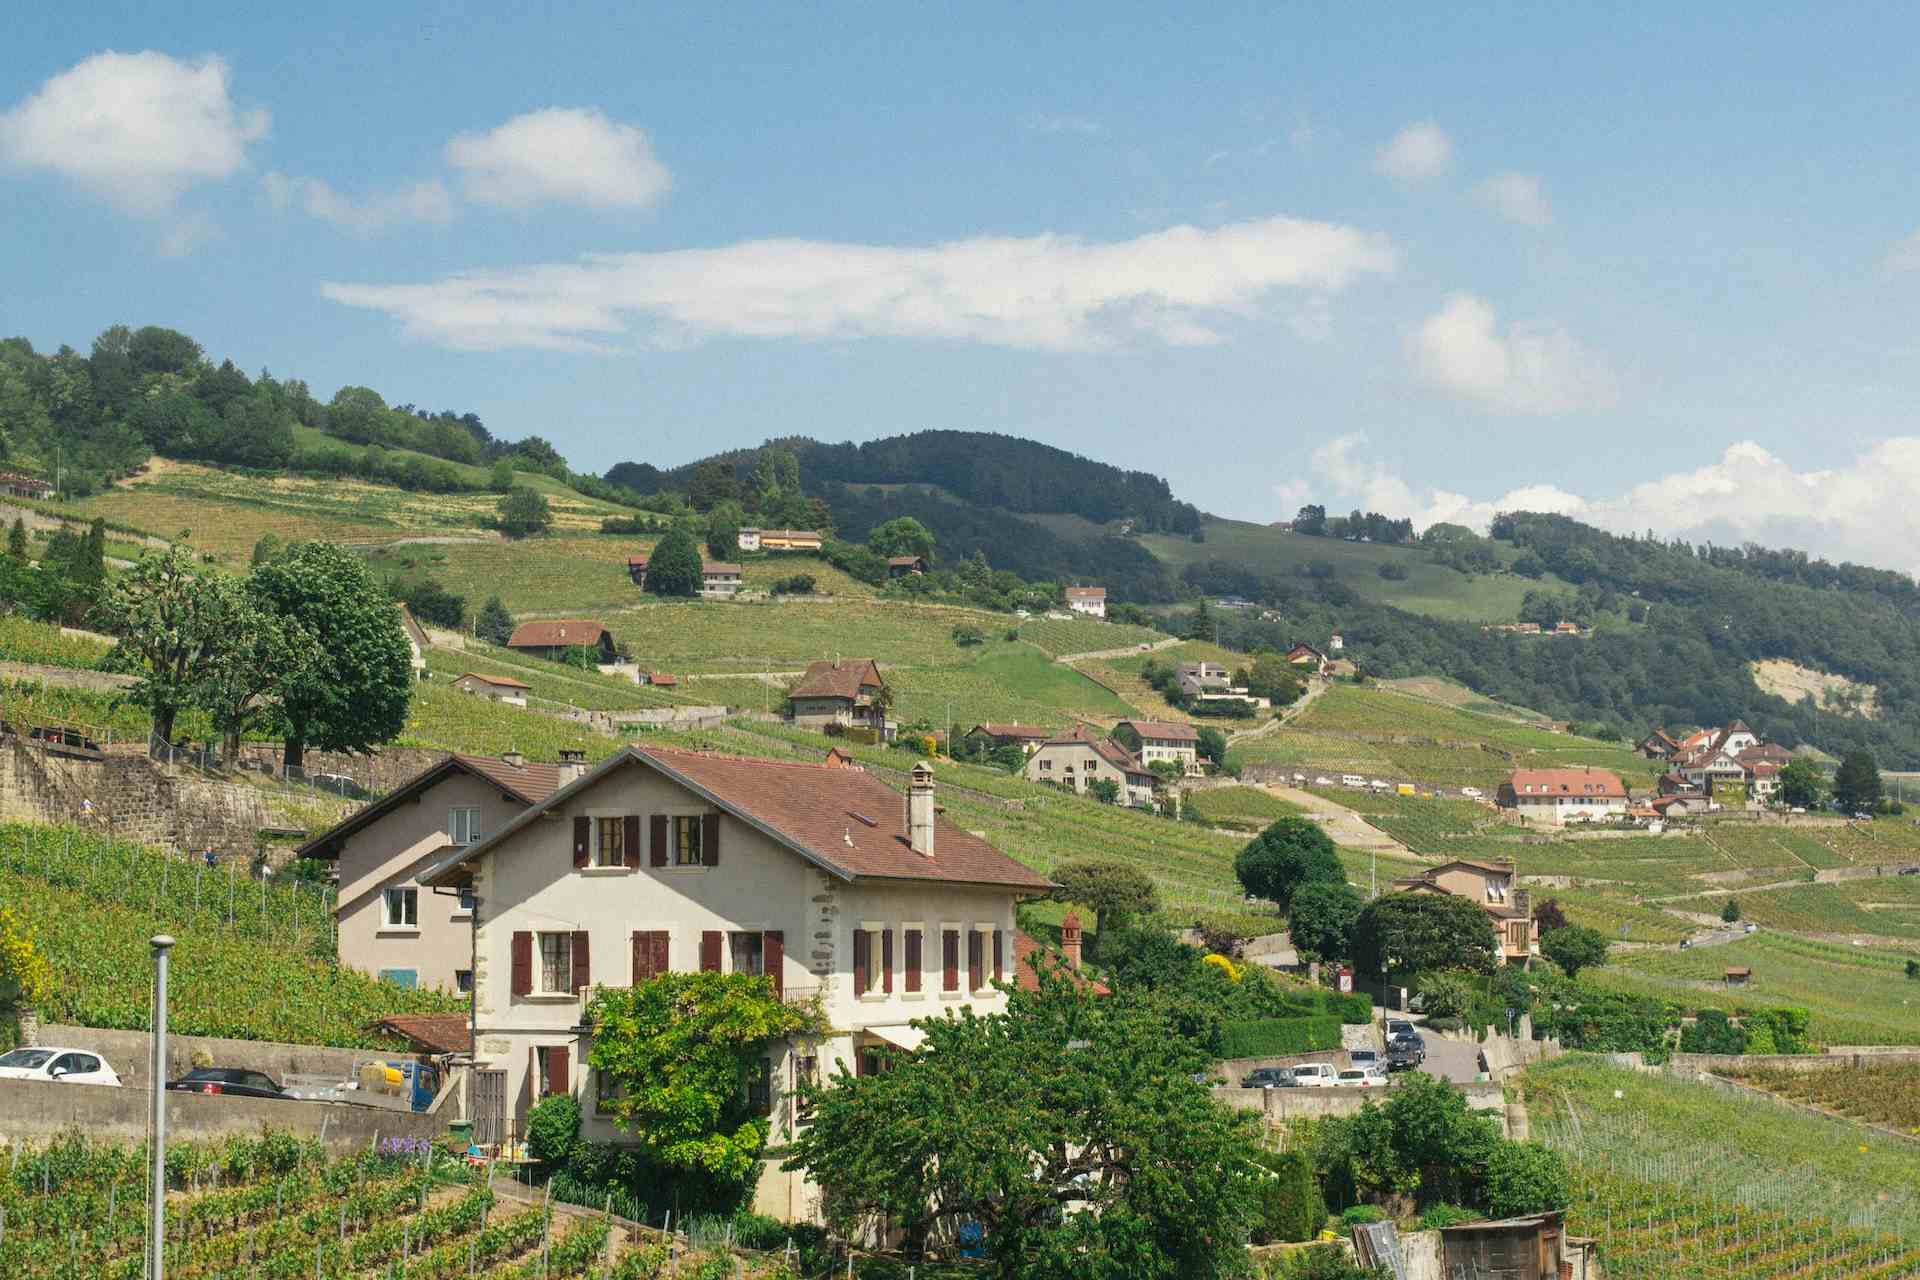 Ferme de la Coudre, producer in Maracon canton of Vaud in Switzerland, | Mimelis